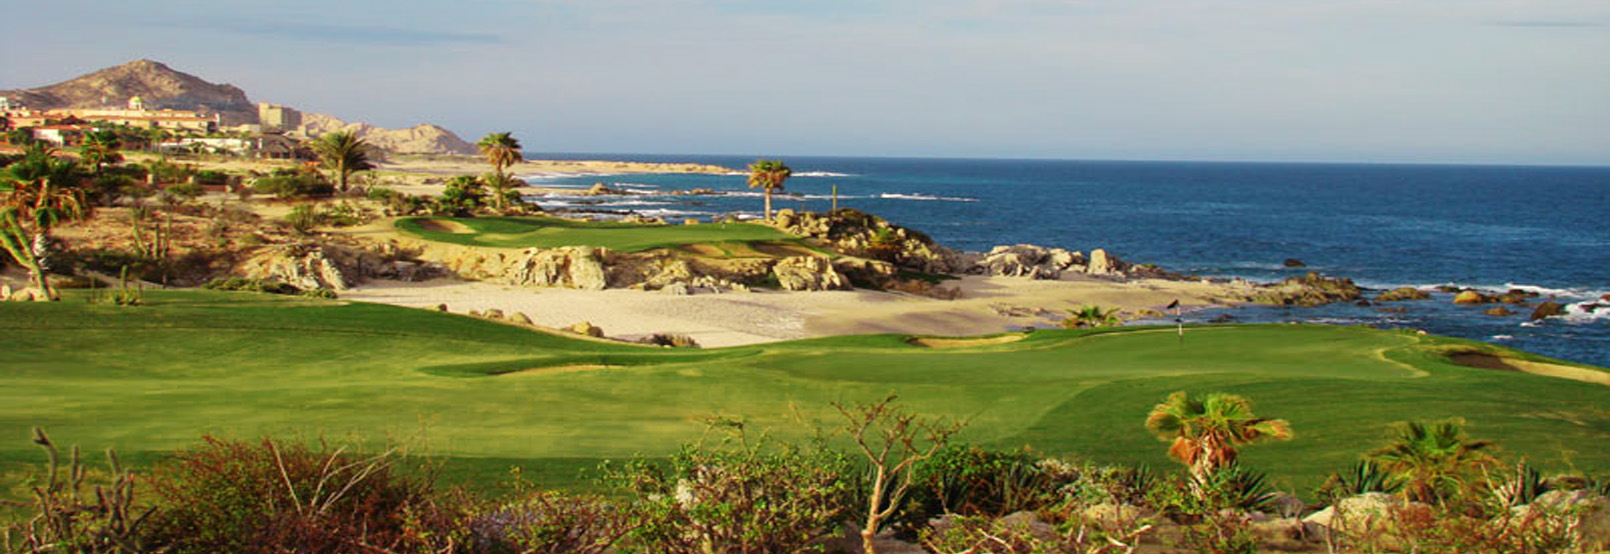 Club de Golf Cabo Del Sol (DESERT course)